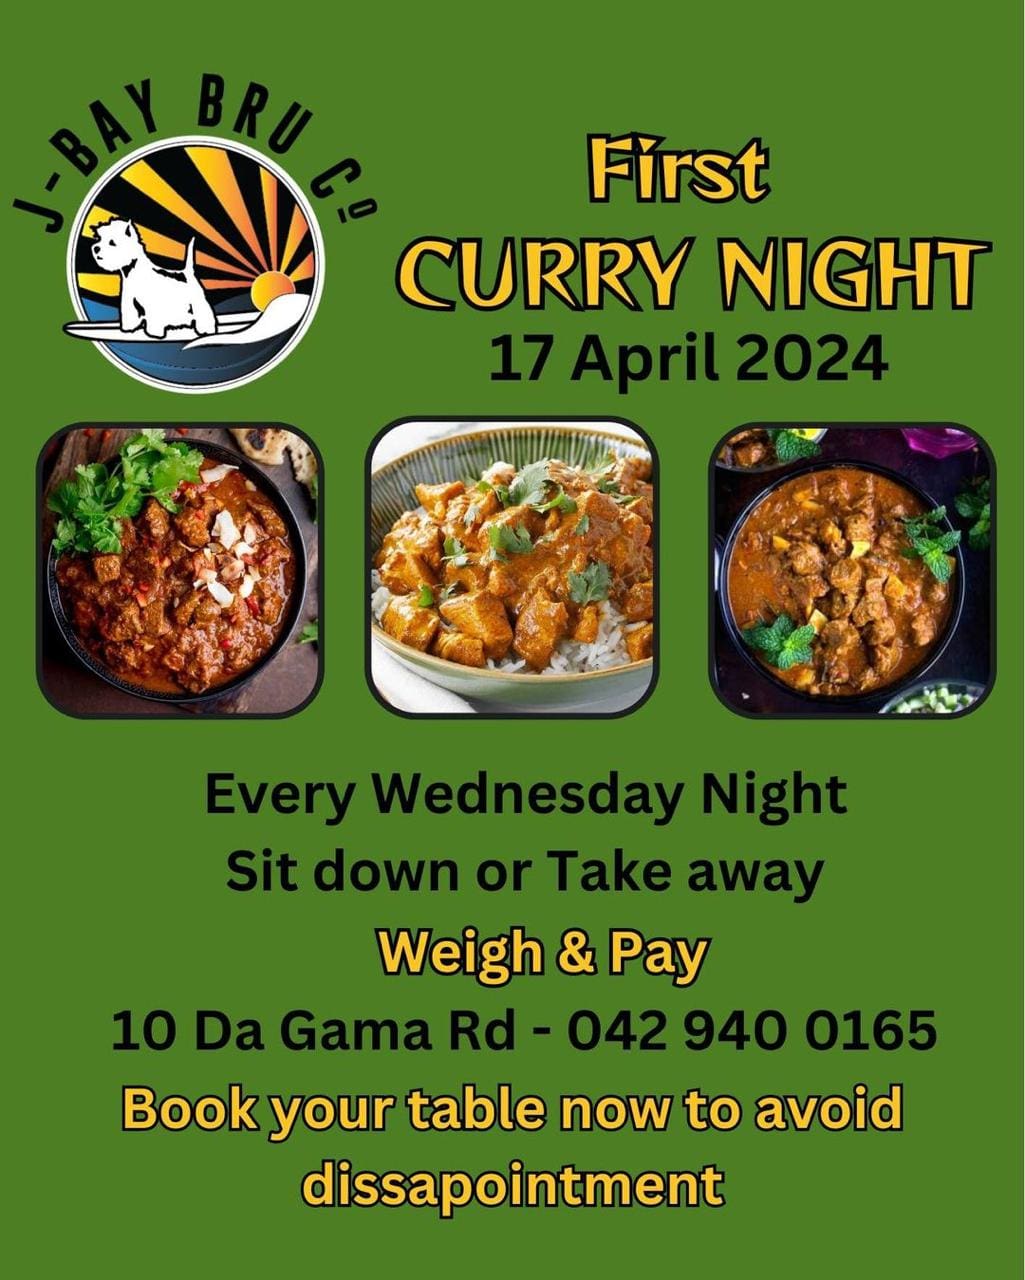 J-Bay Bru Co Curry Night - Weigh & Pay